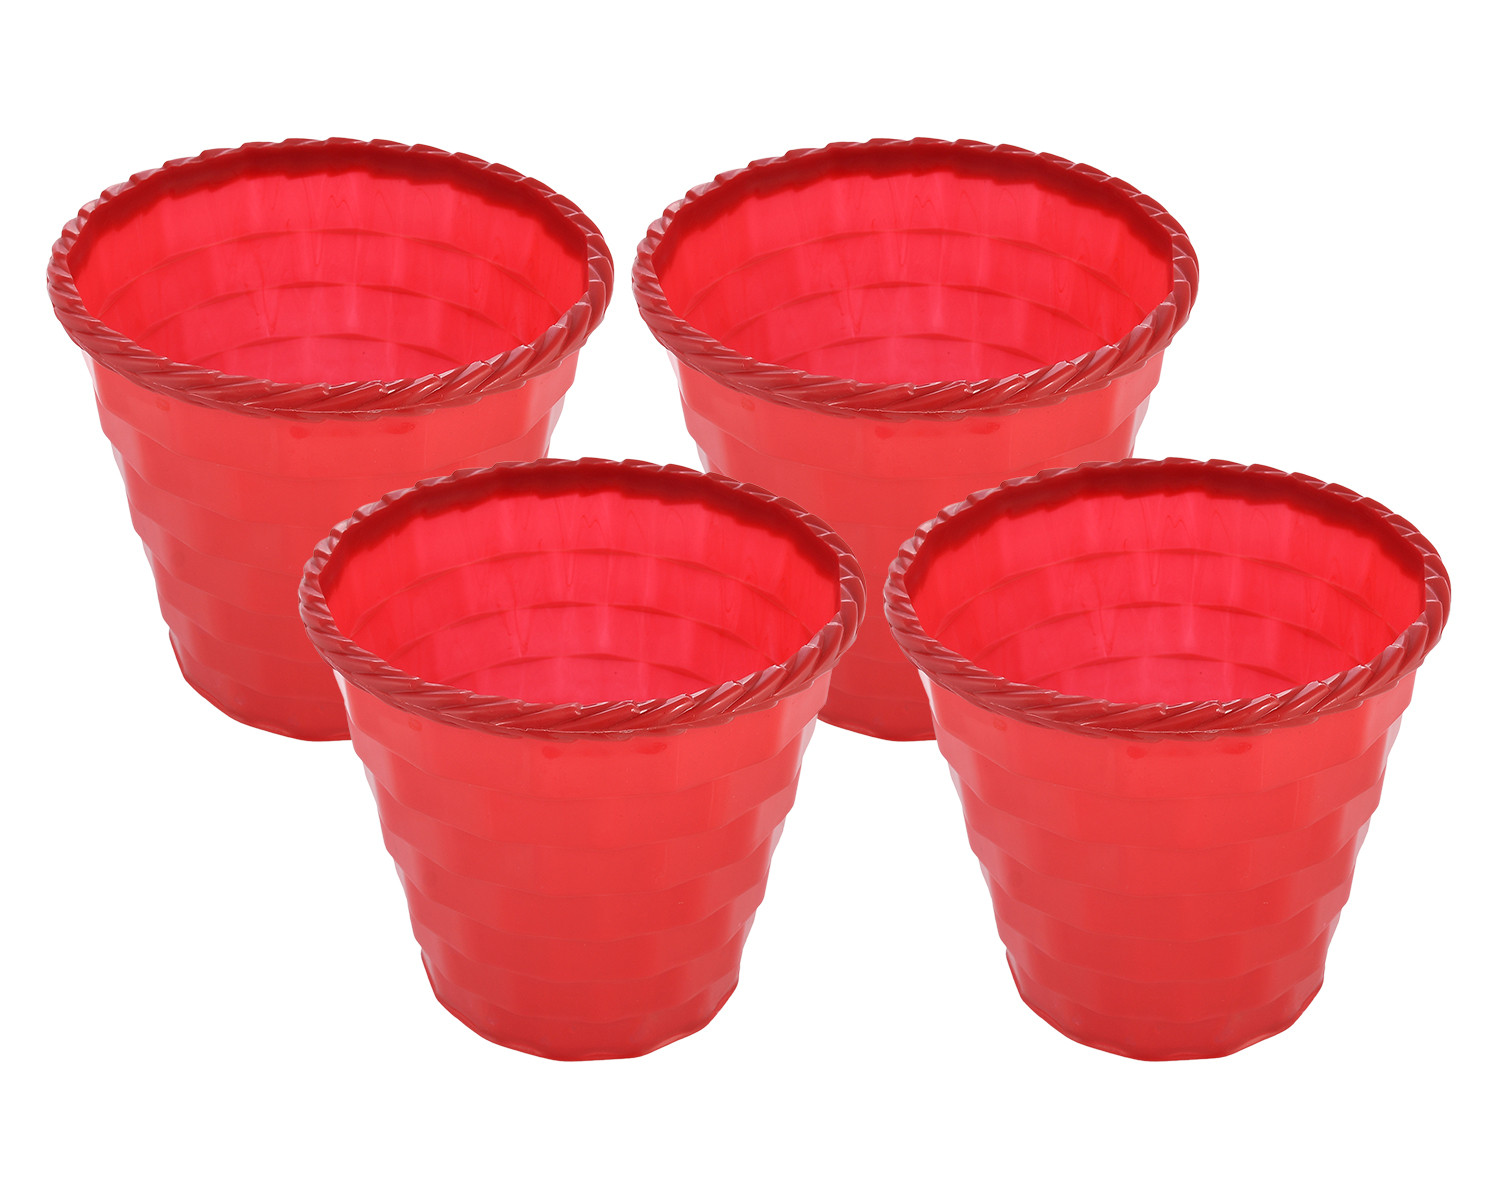 Kuber Industries Brick Flower Pot|Durable Plastic Flower Pots|Planters for Home Décor|Garden|Living Room|Balcony|6 Inch|(Red)